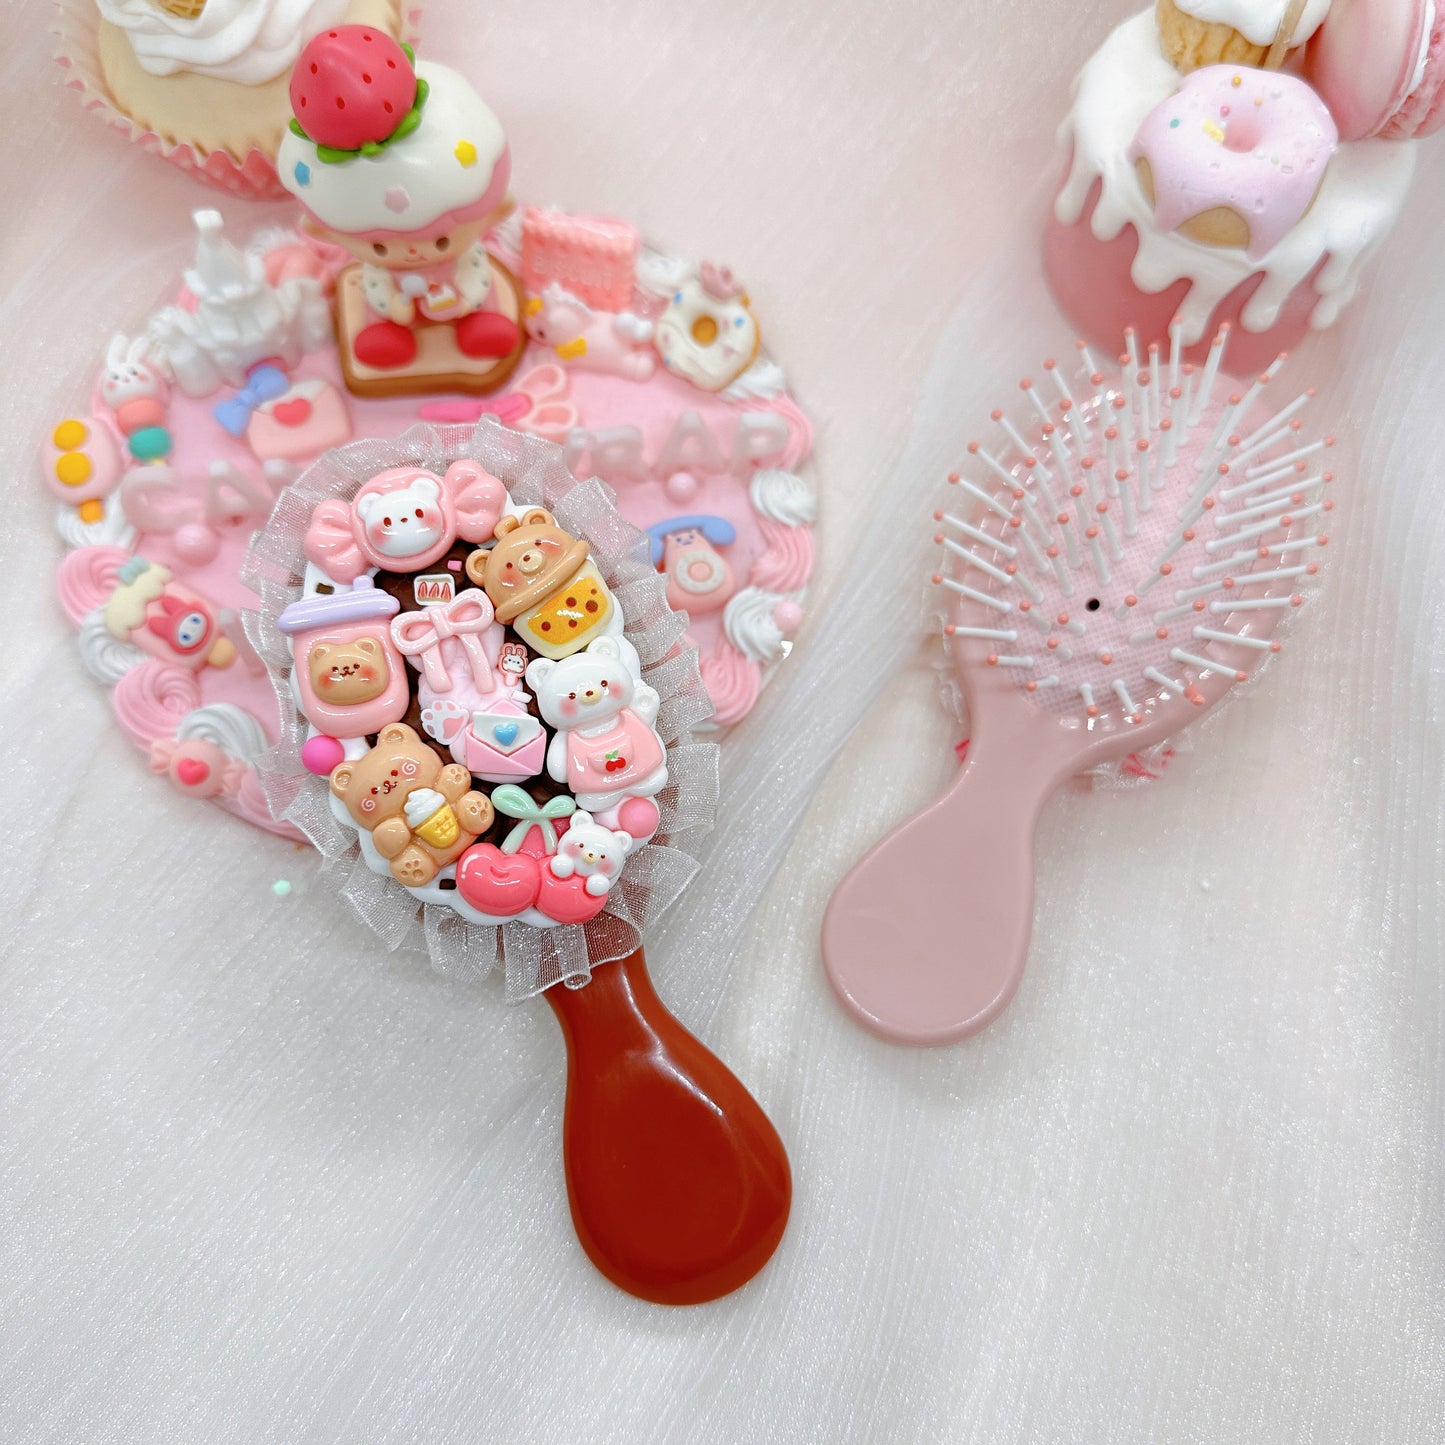 Handmade hairbrush with lace, Kawaii Decoden Hairbrush, Cute Cartoon Hairbrush